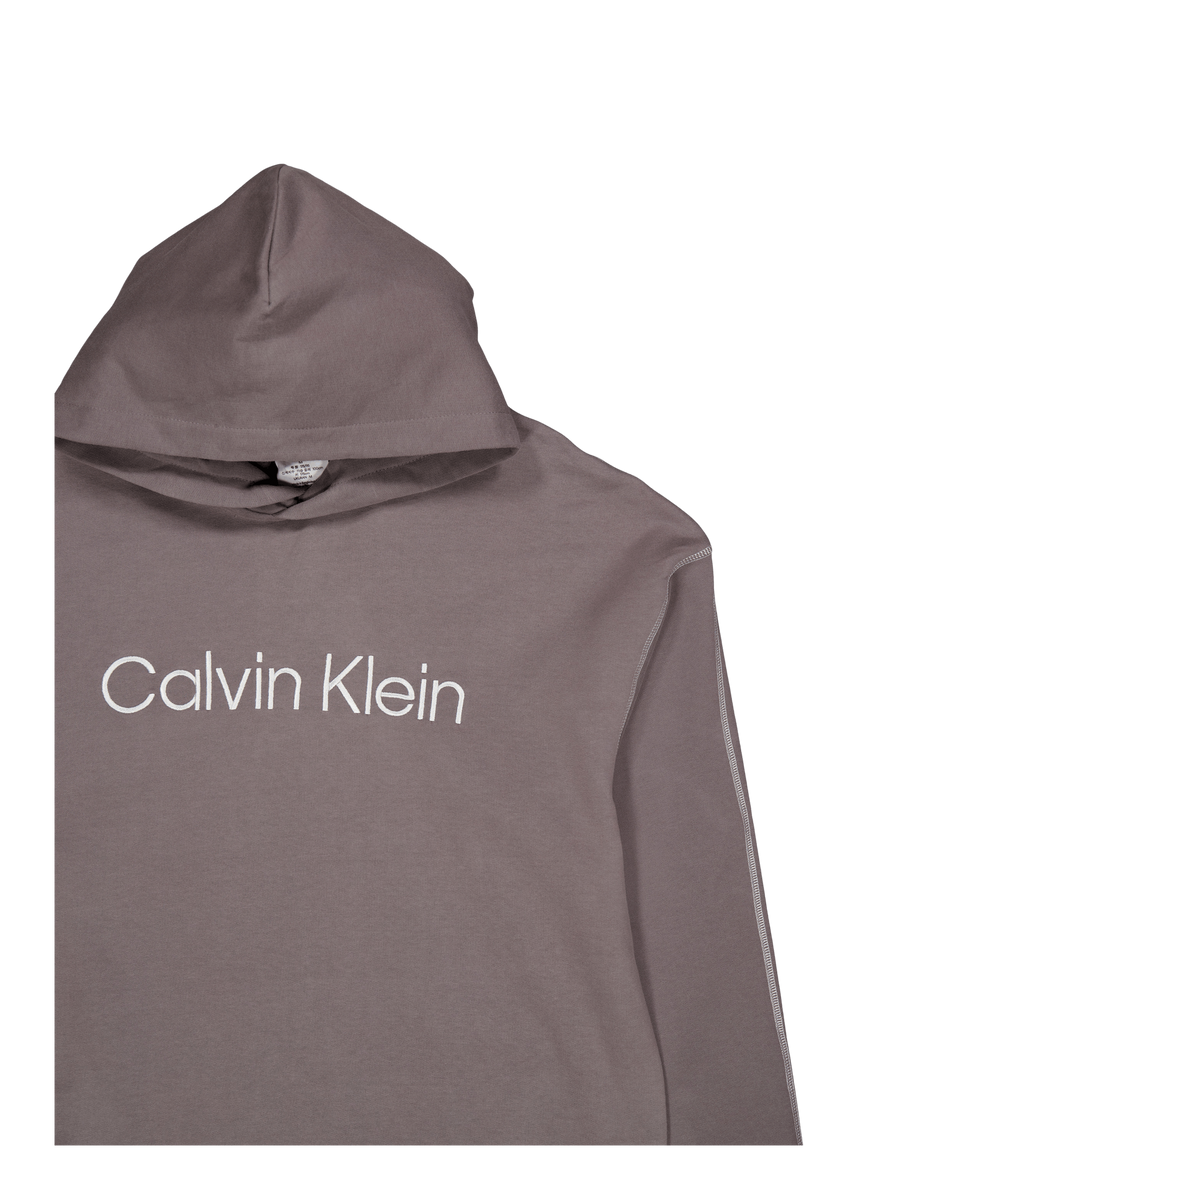 Calvin Klein L/s Hoodie